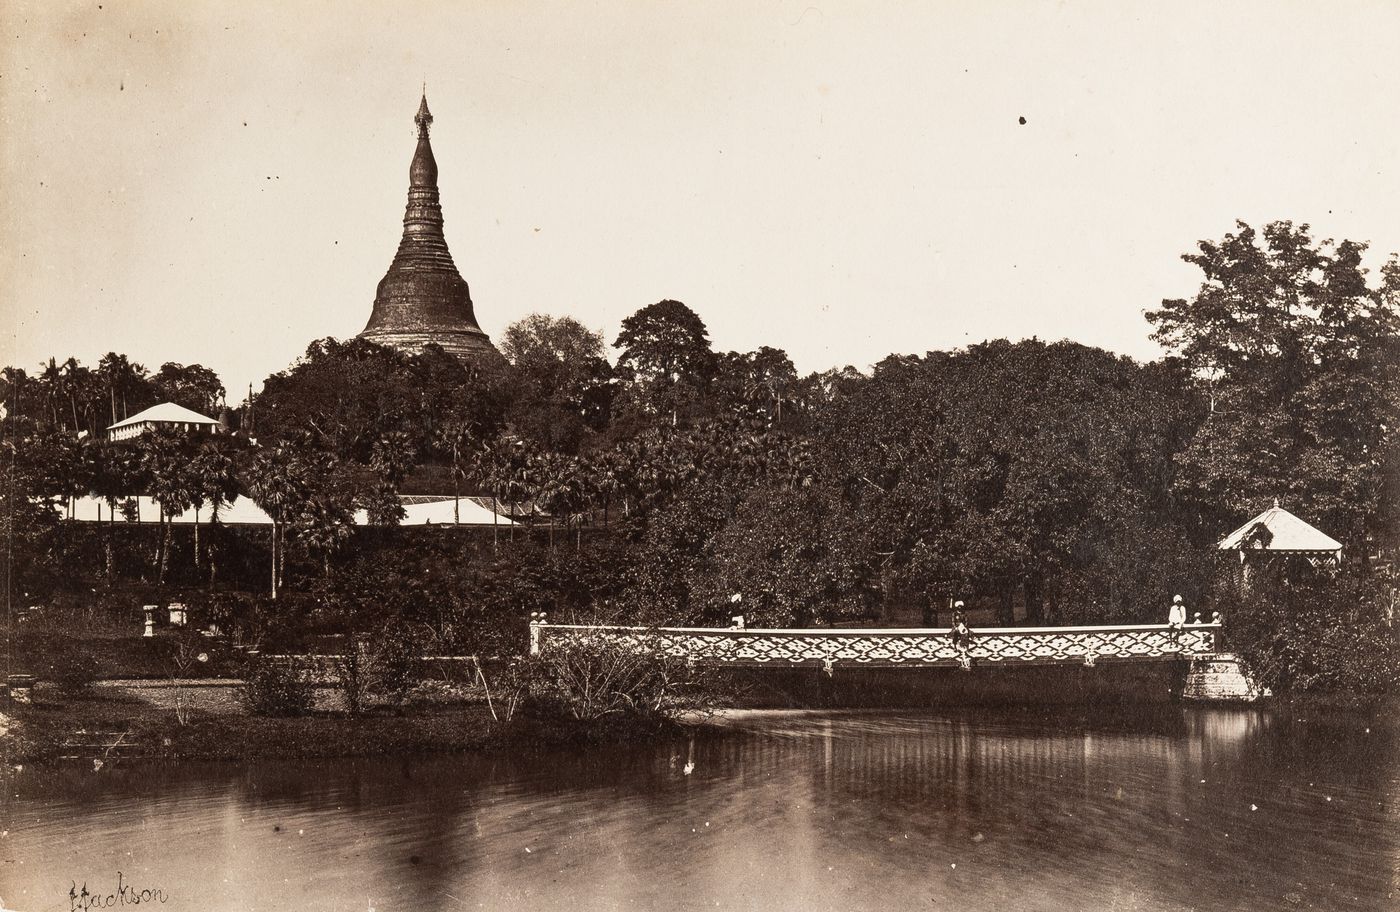 View of Public Gardens near the Shwedagon Pagoda, Rangoon (now Yangon), Burma (now Myanmar)